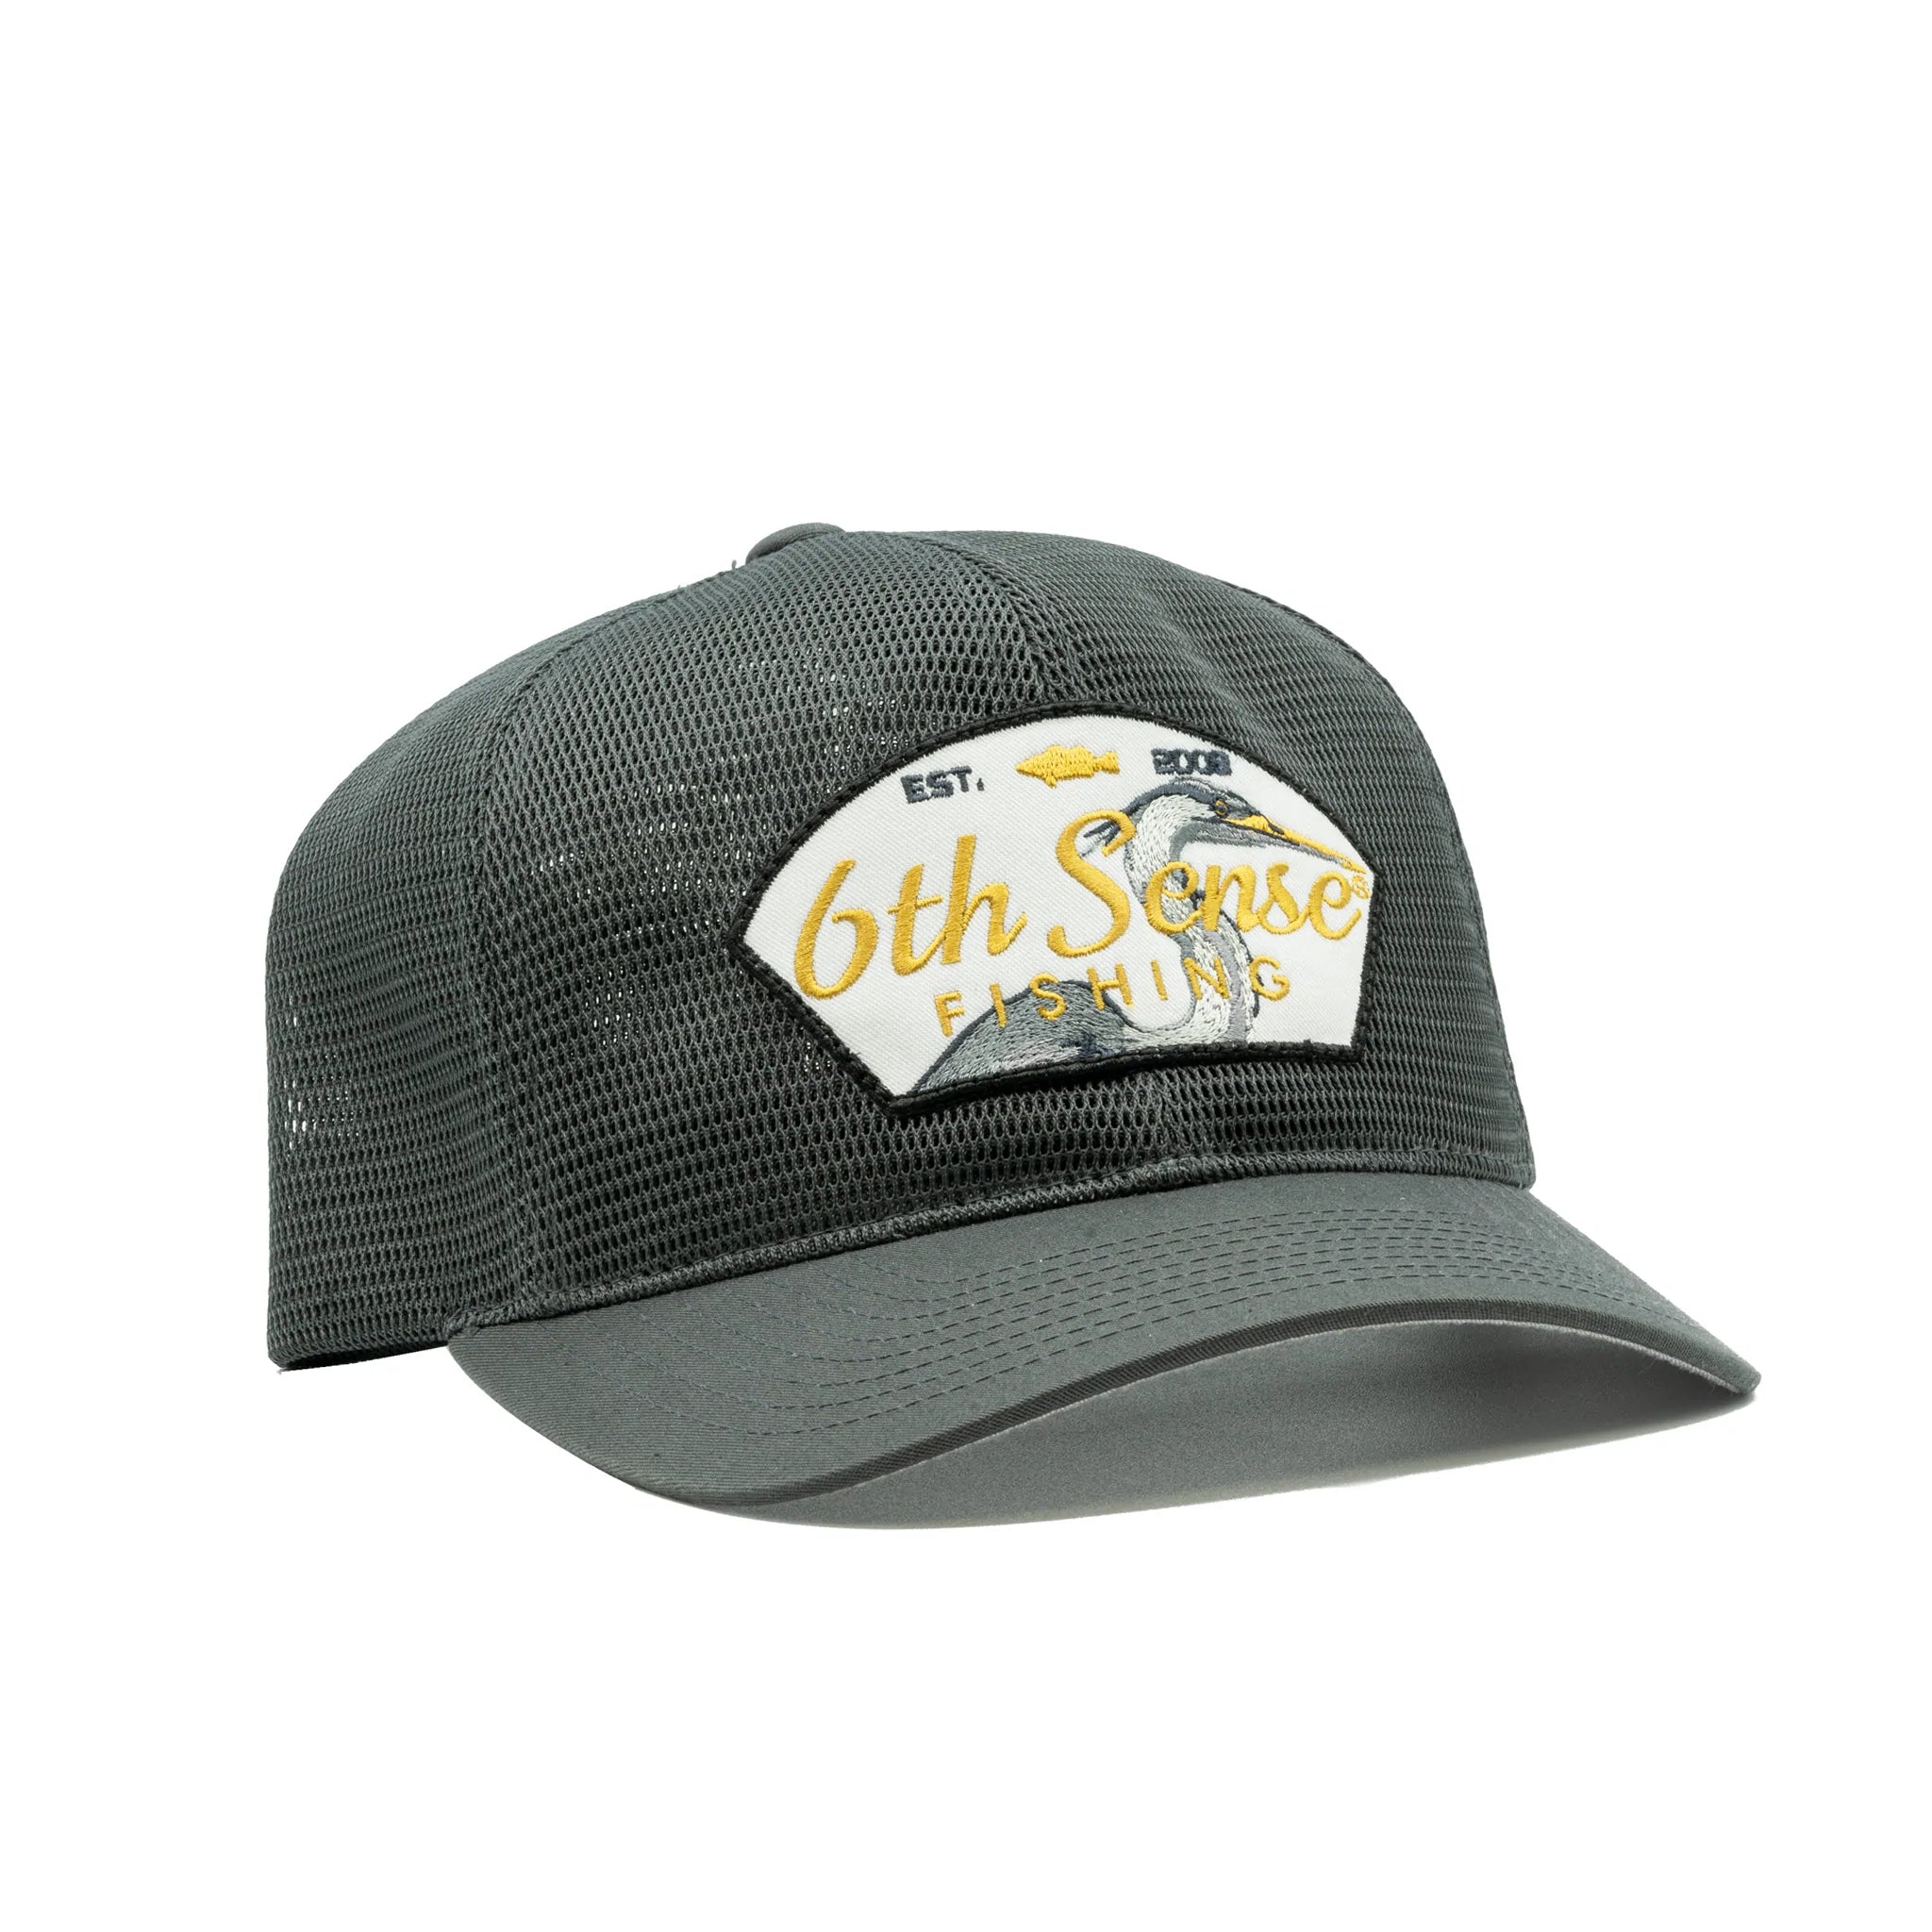 Buy freshwater-heron-fishlite-mesh-gray 6TH SENSE HATS